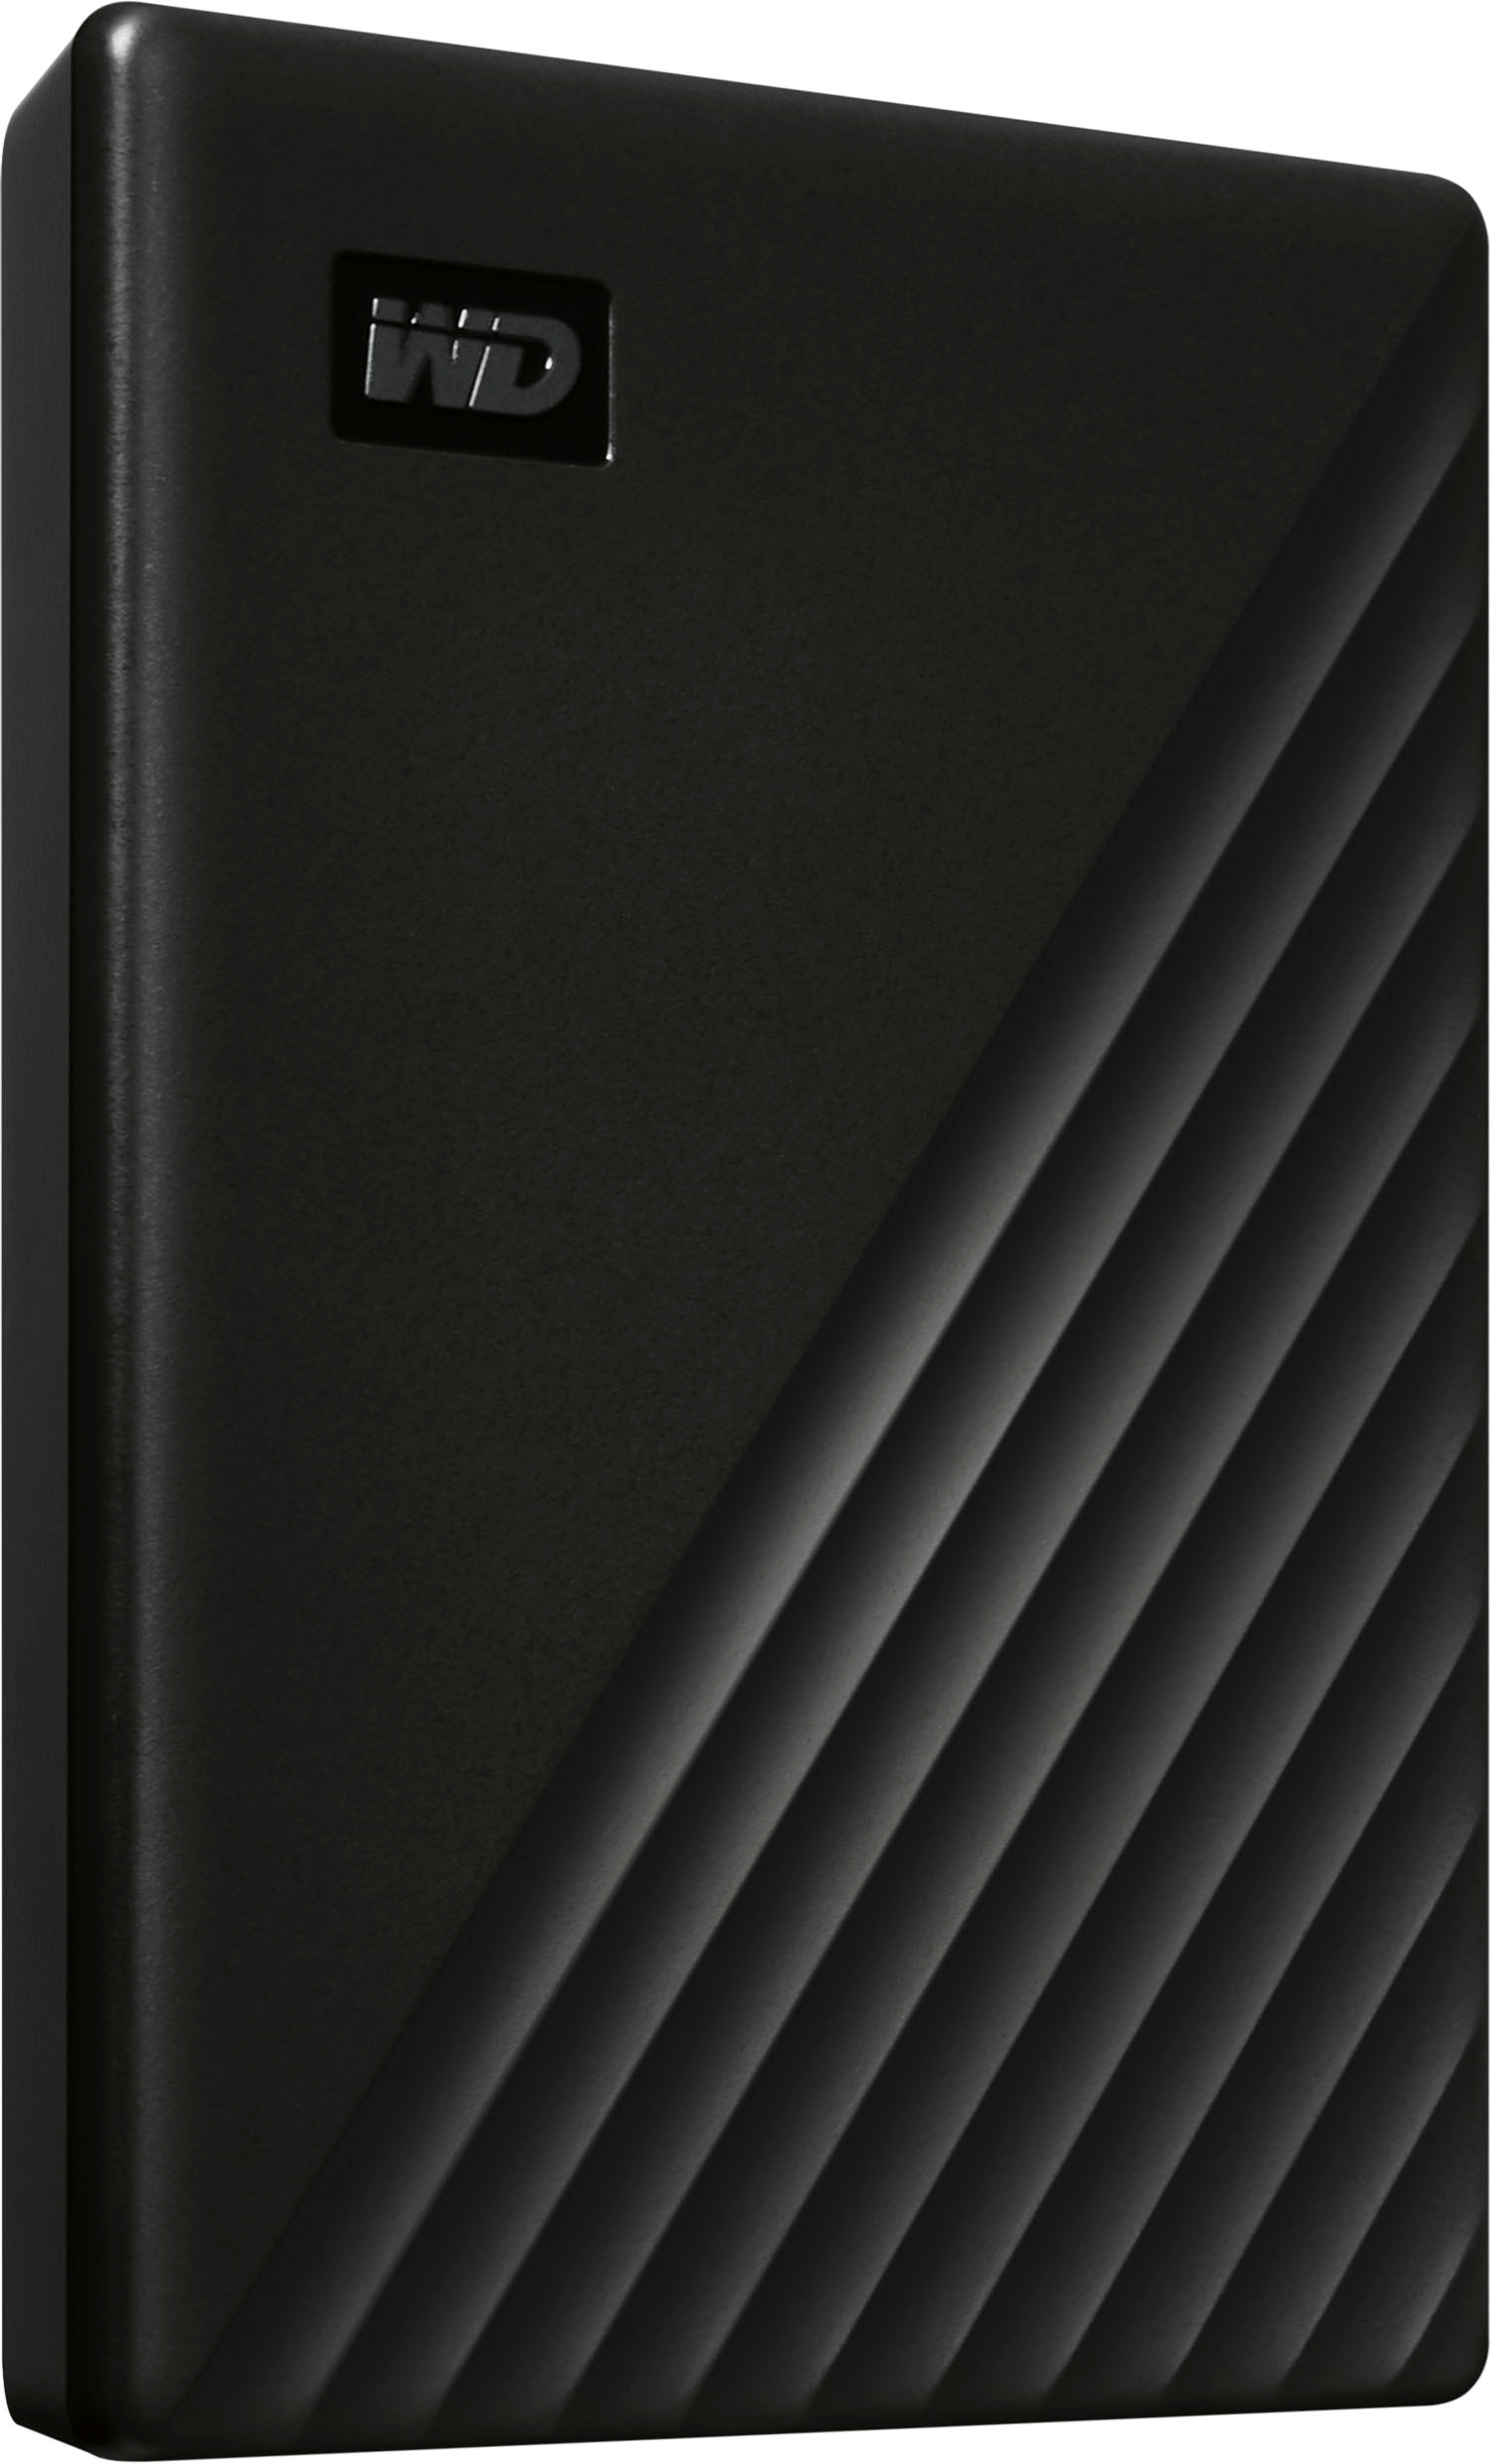 Angle View: PNY - CS900 120GB Internal SSD SATA